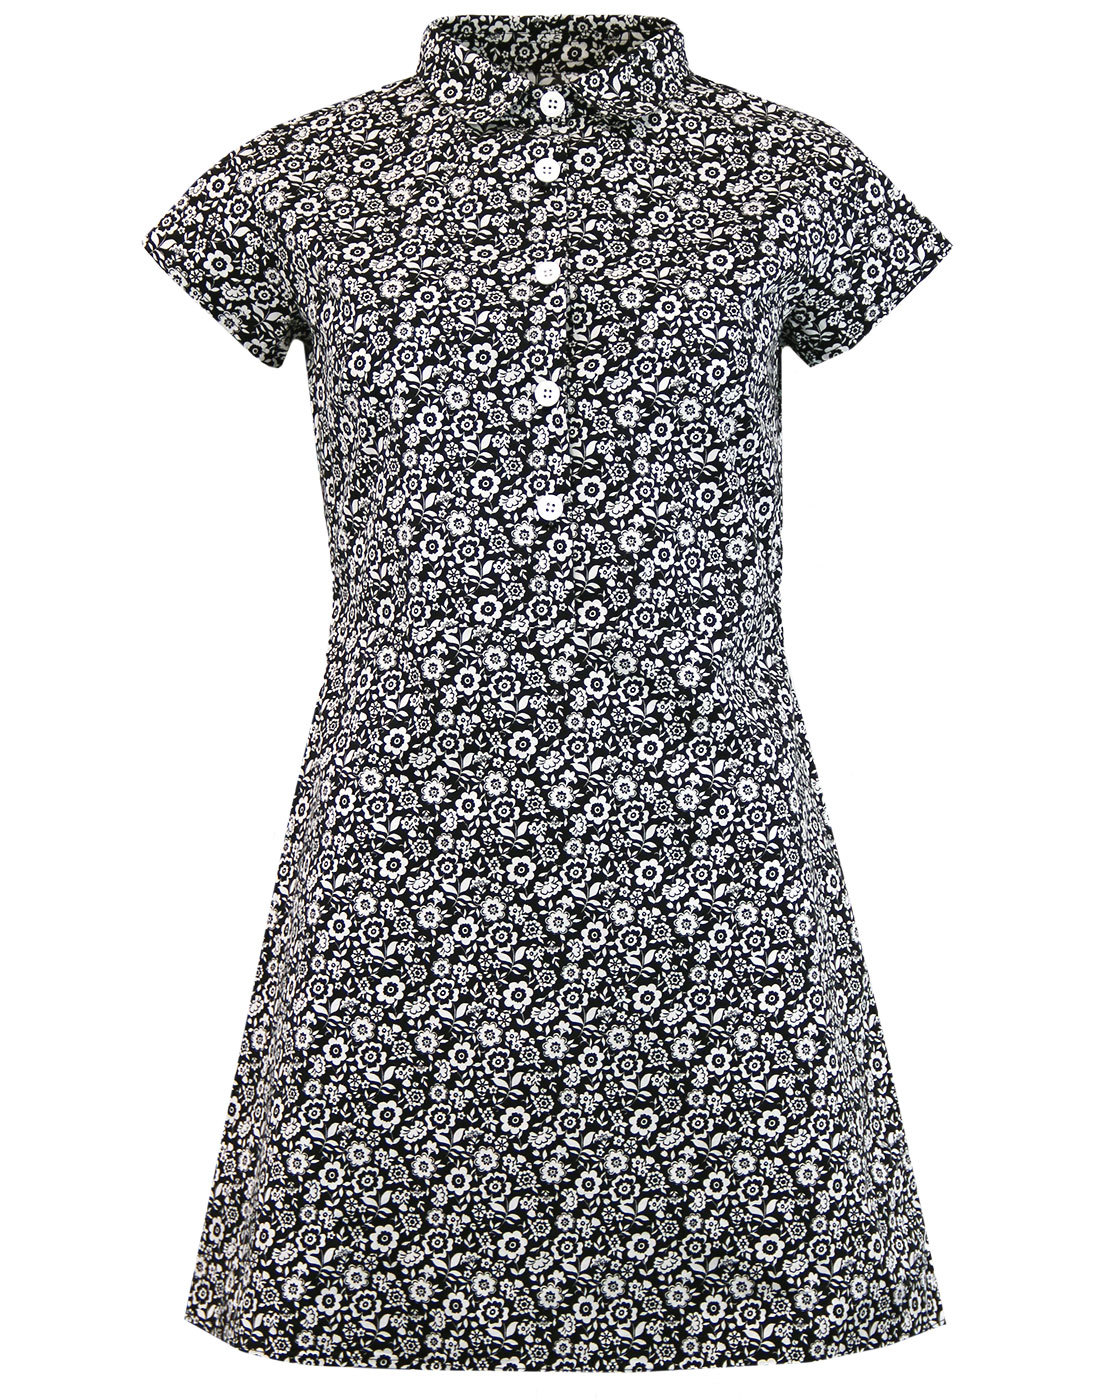 MADCAP ENGLAND Jane Retro 1960s Mod Floral Shirt Dress in Black